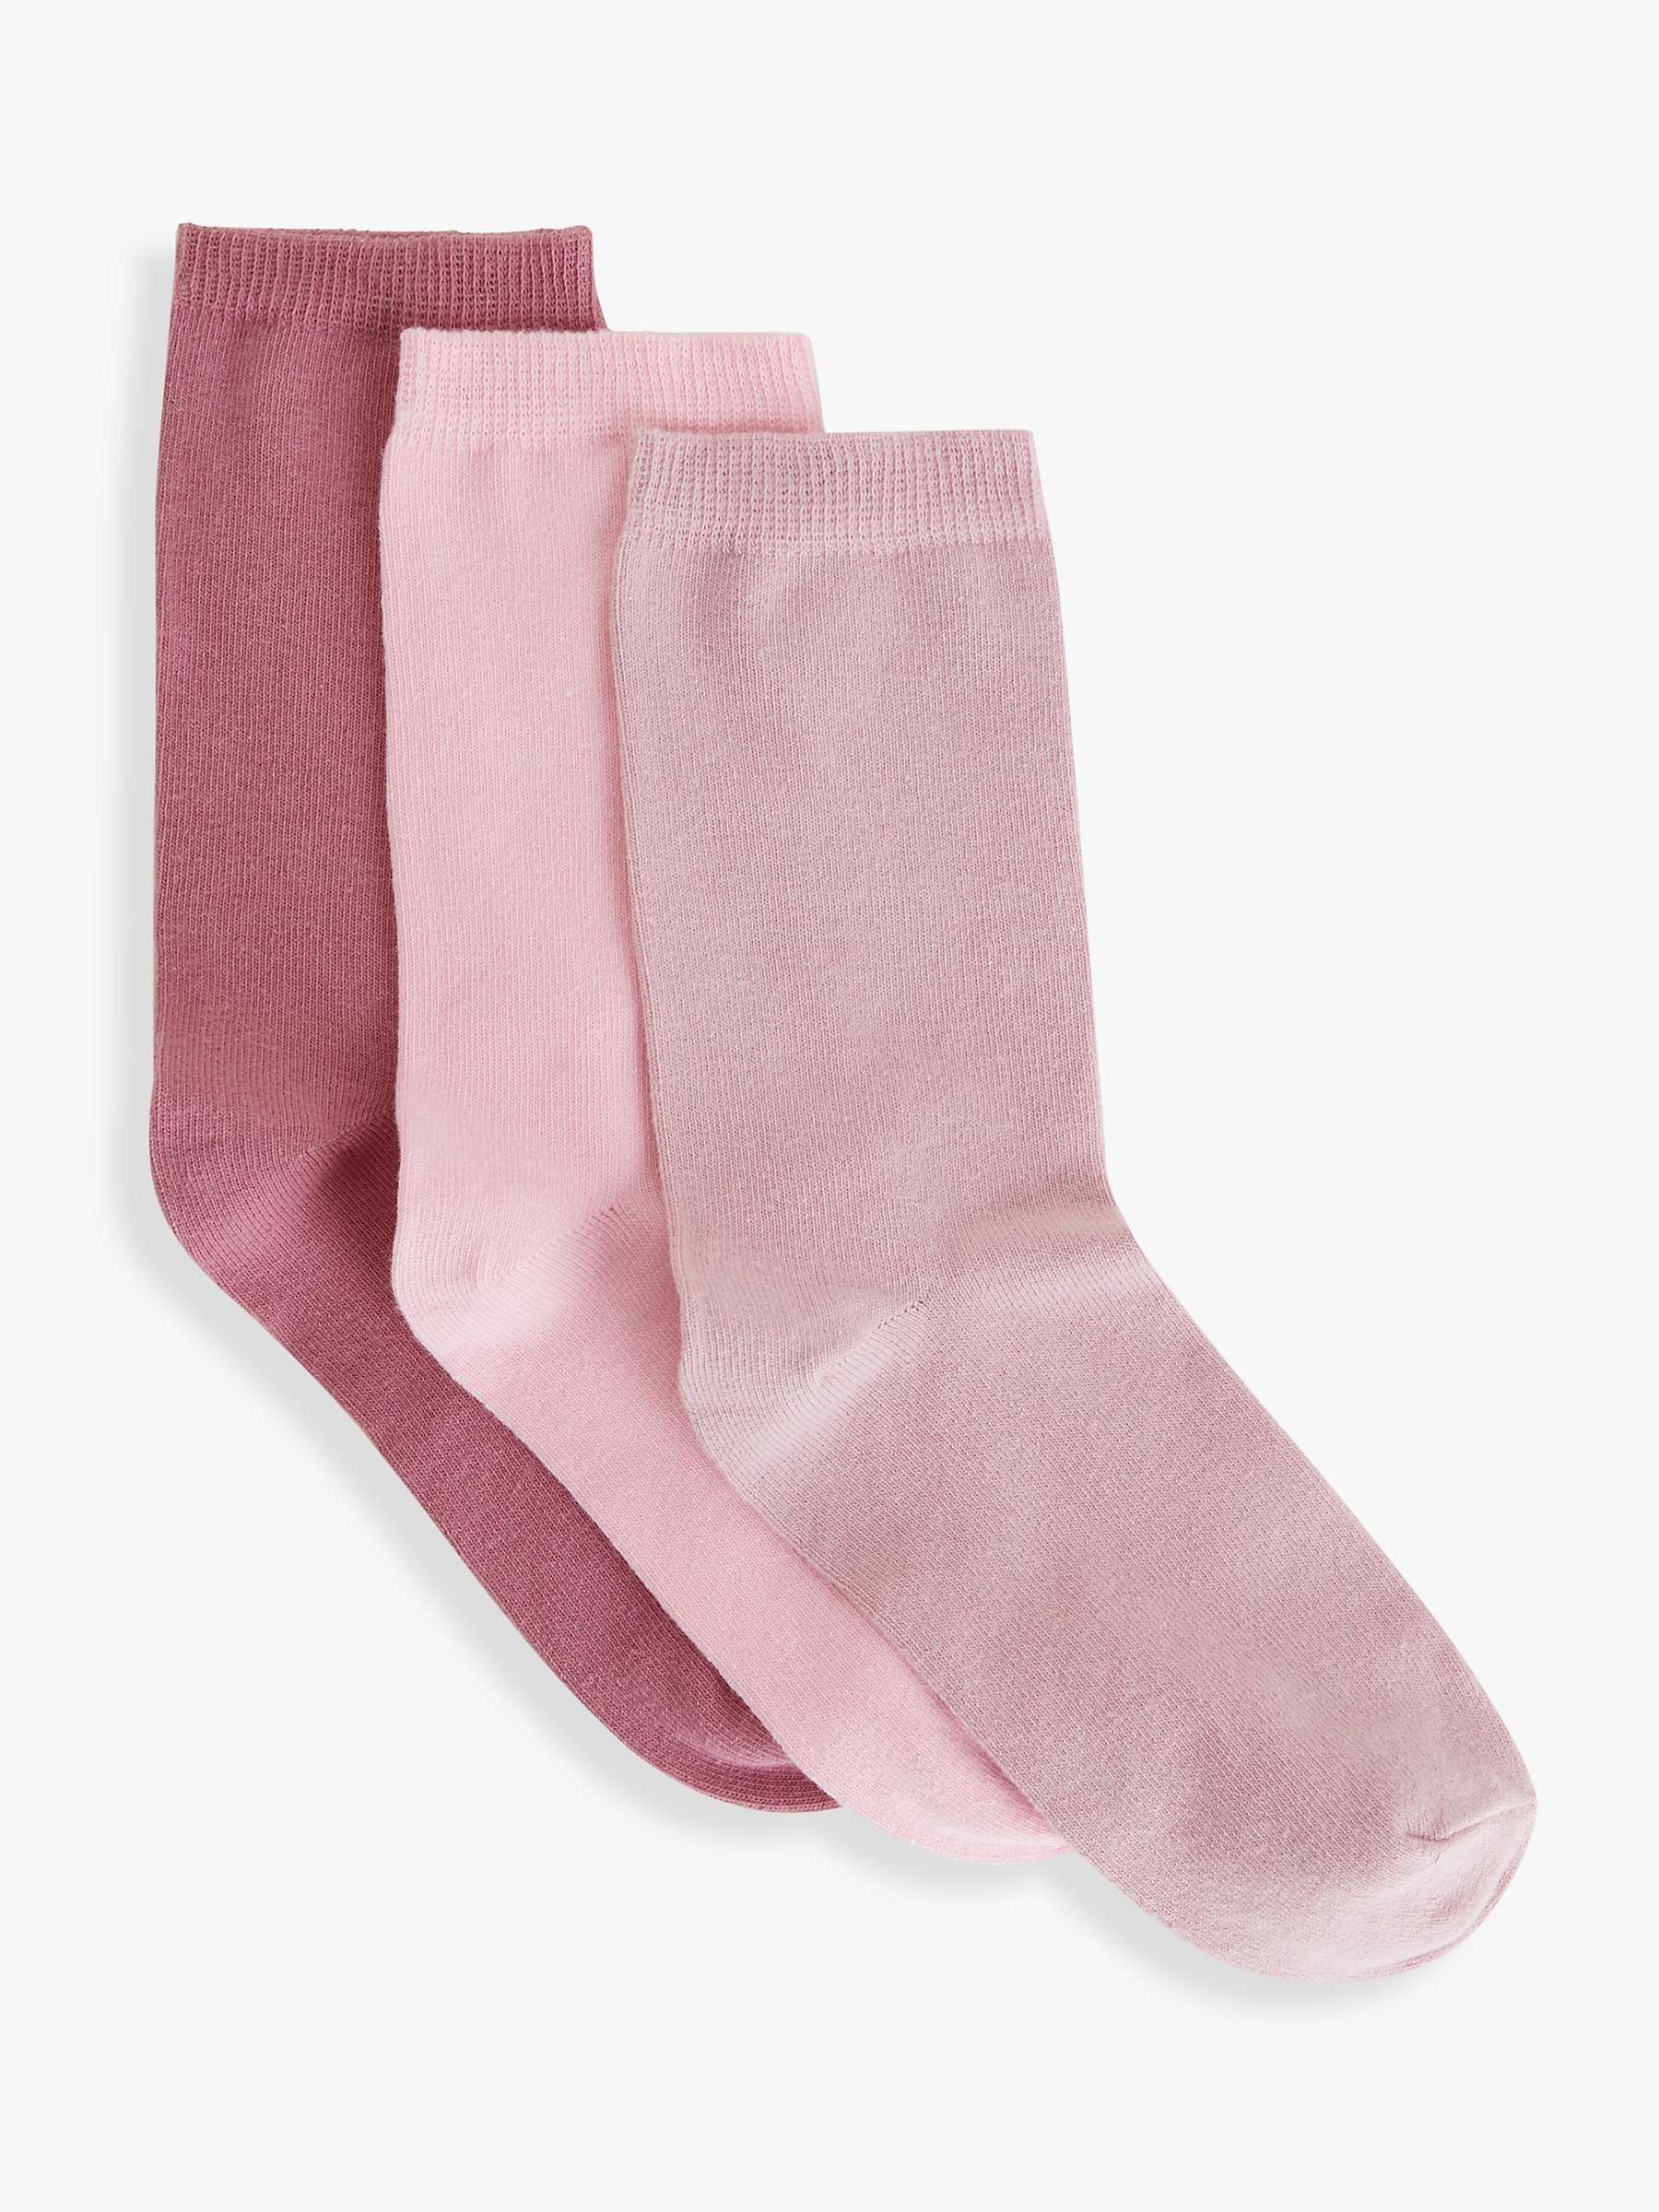 Buy John Lewis Ankle Socks, Pack of 3, Pinks Online at johnlewis.com